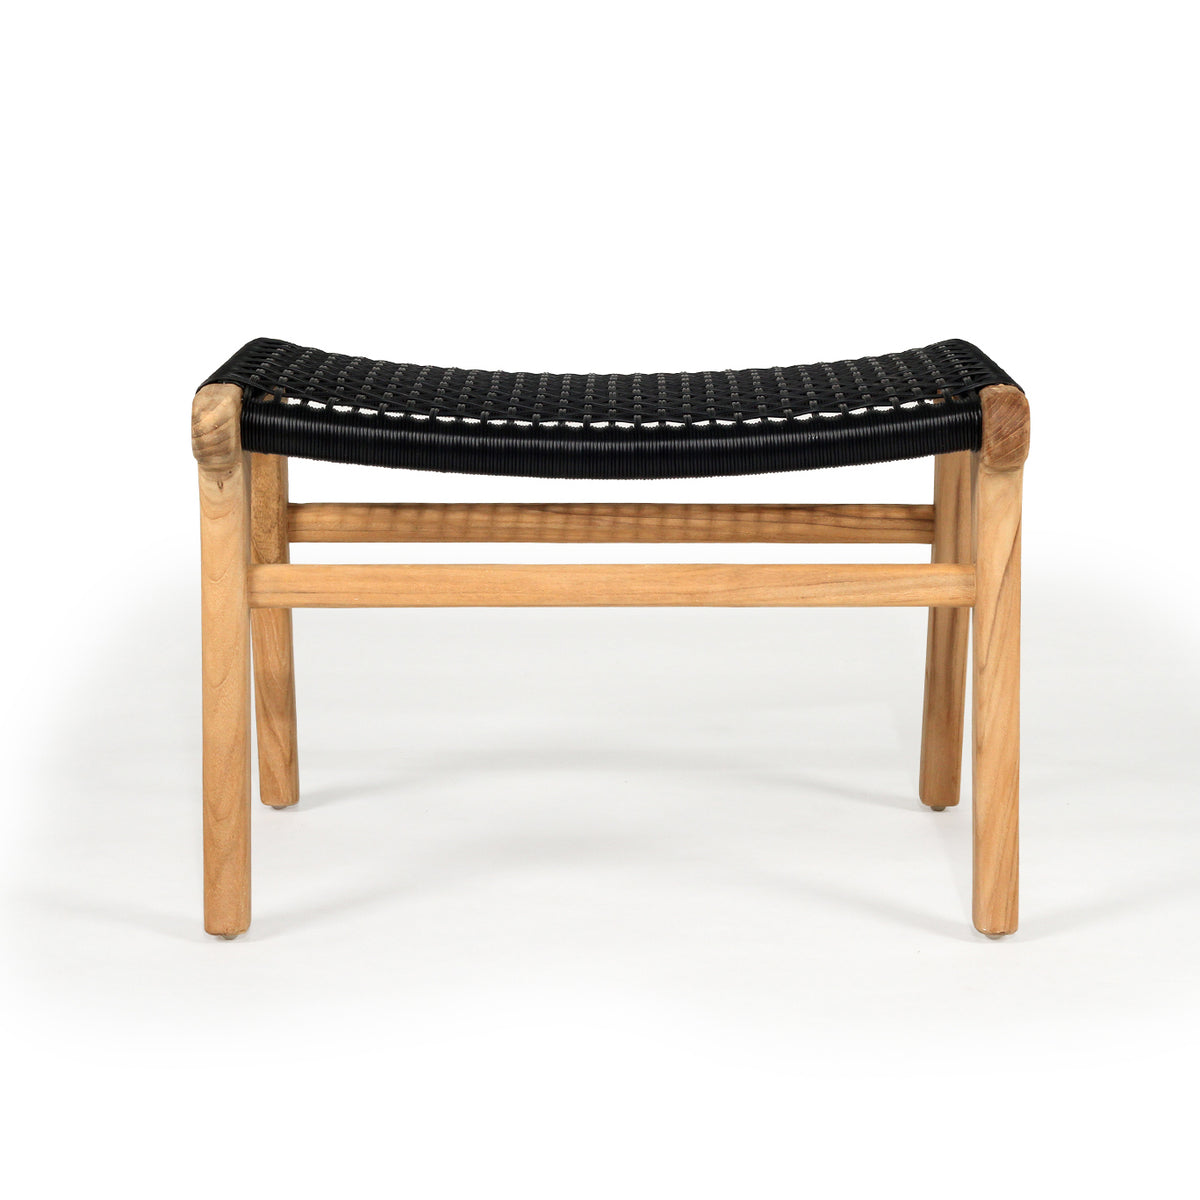 Earine Lazy Chair Ottoman – Black - Notbrand